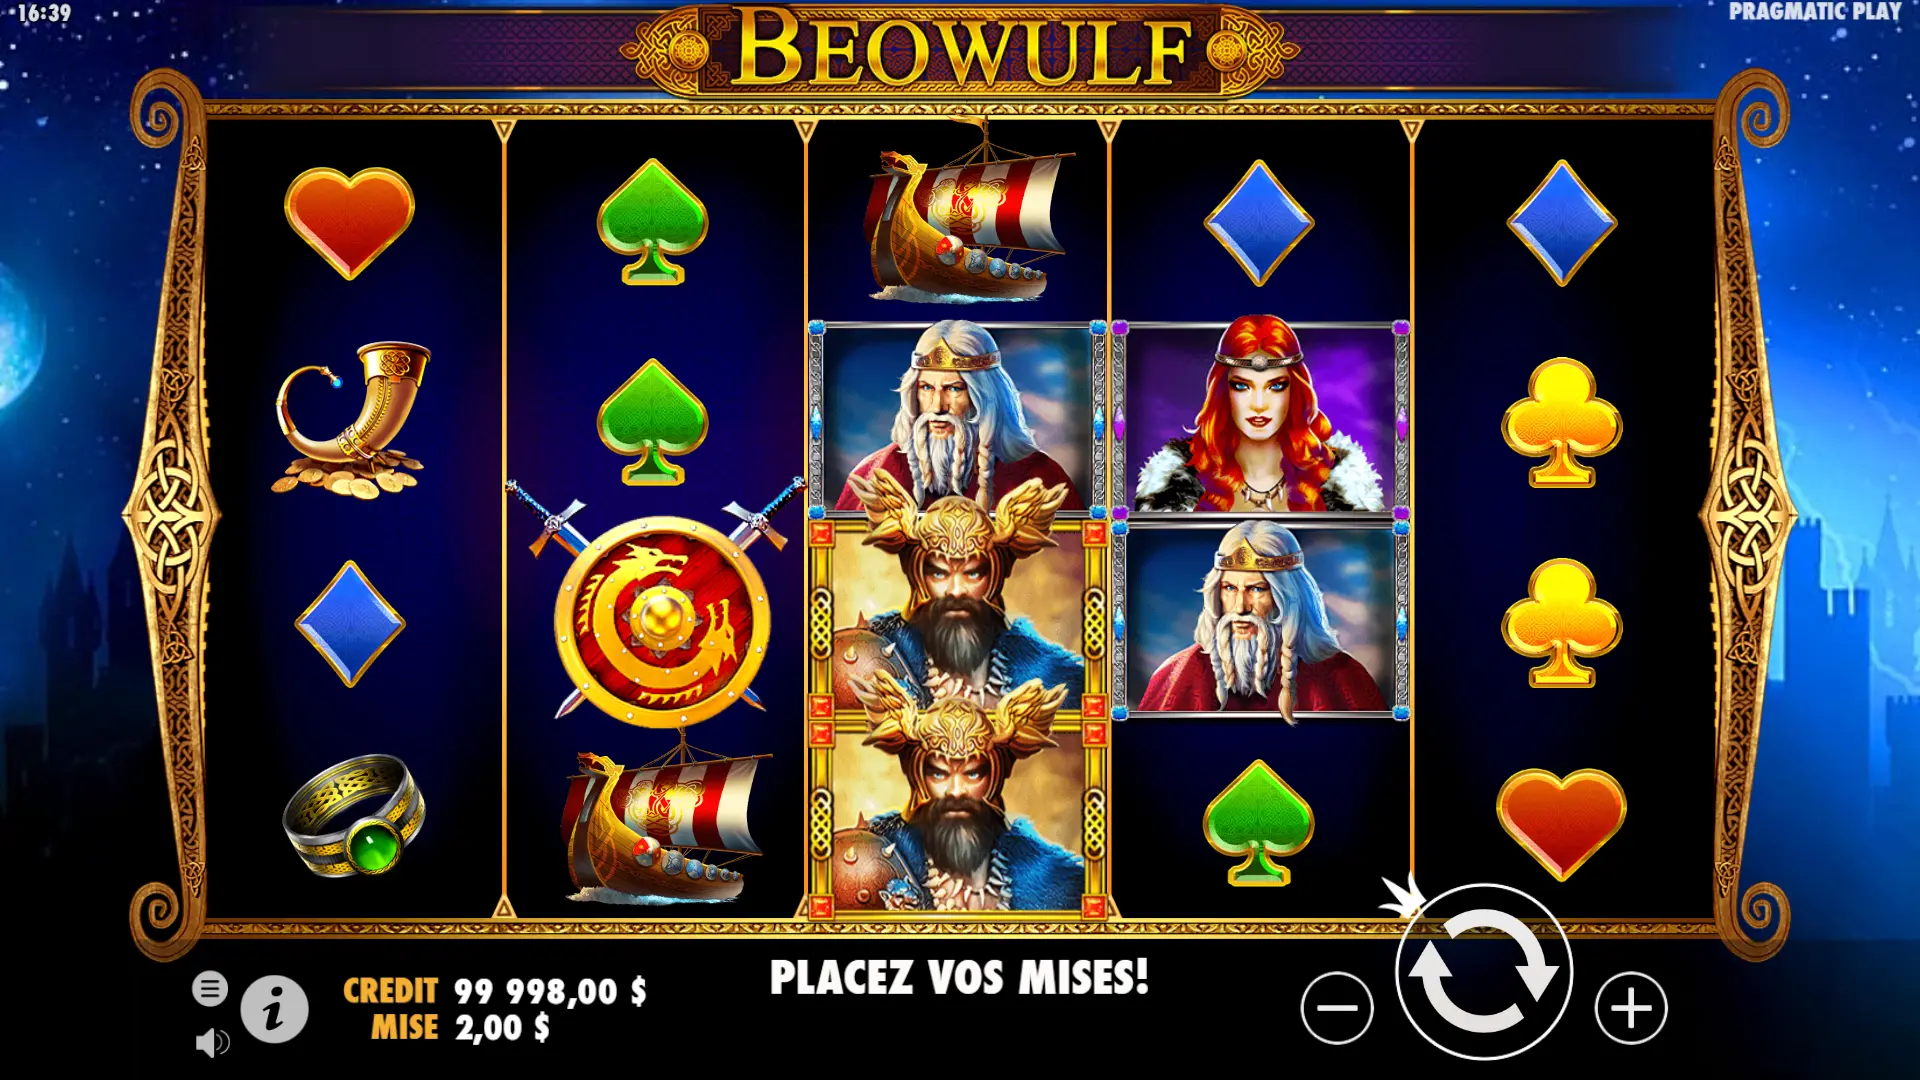 The Beowulf slot machine by Pragmatic Play